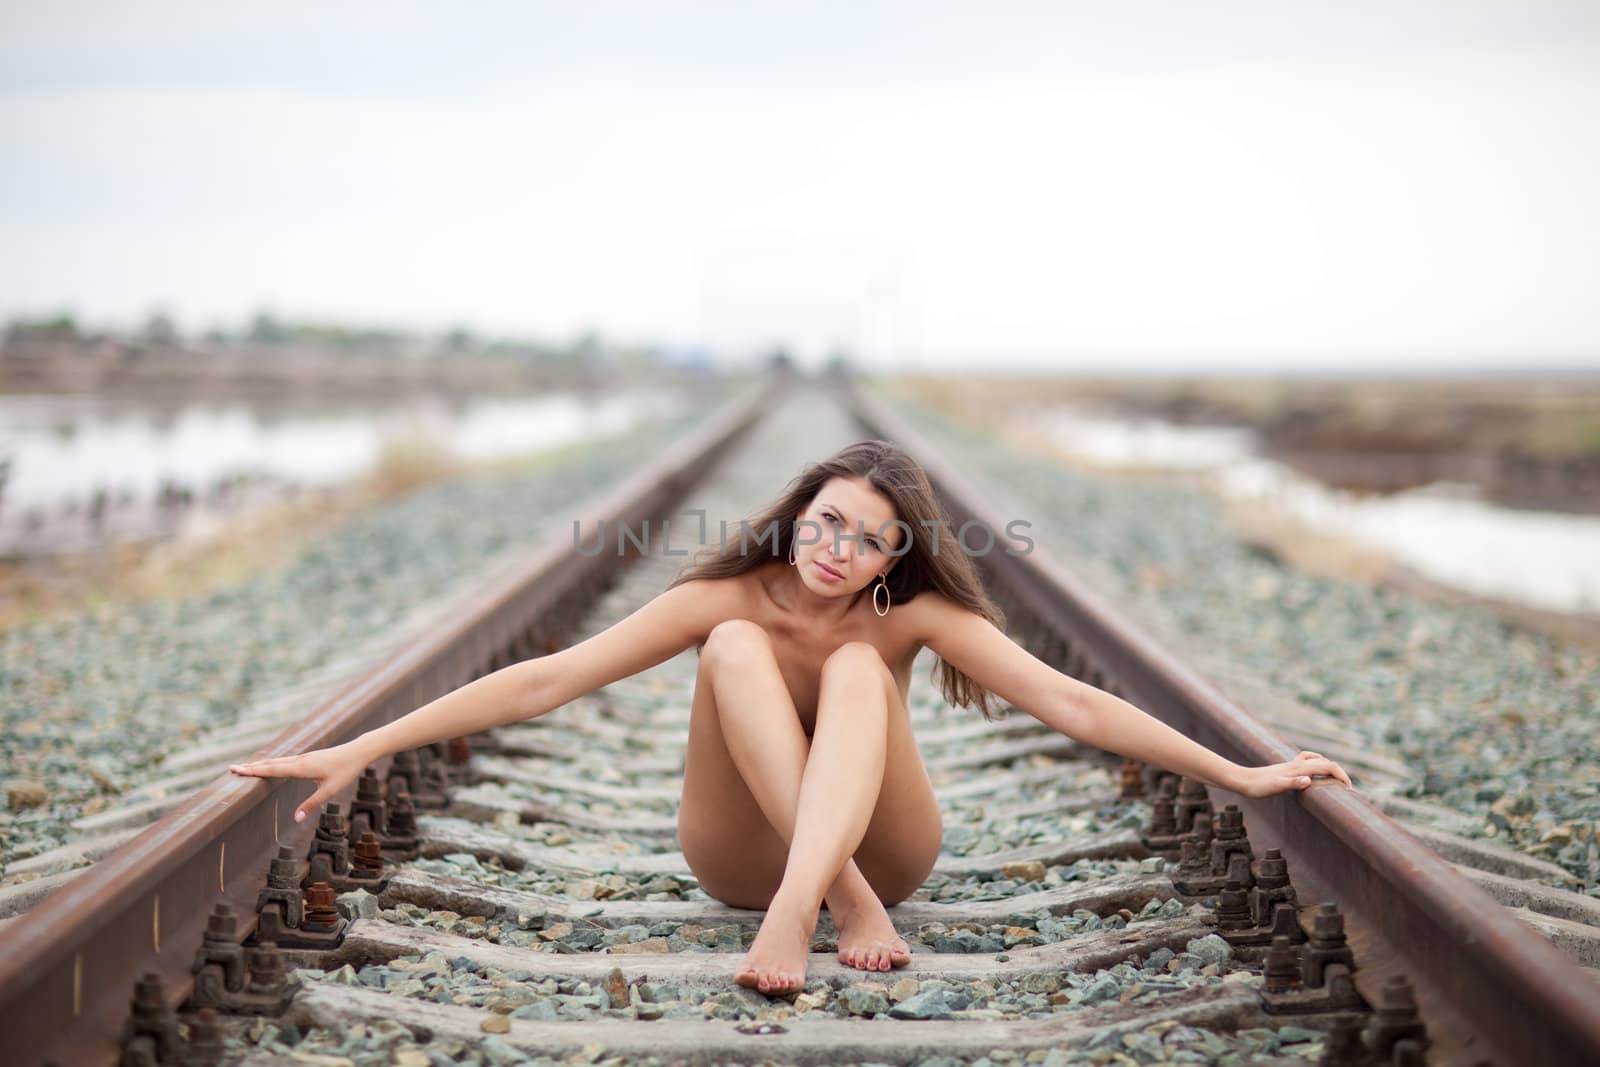 siting girl on the railway